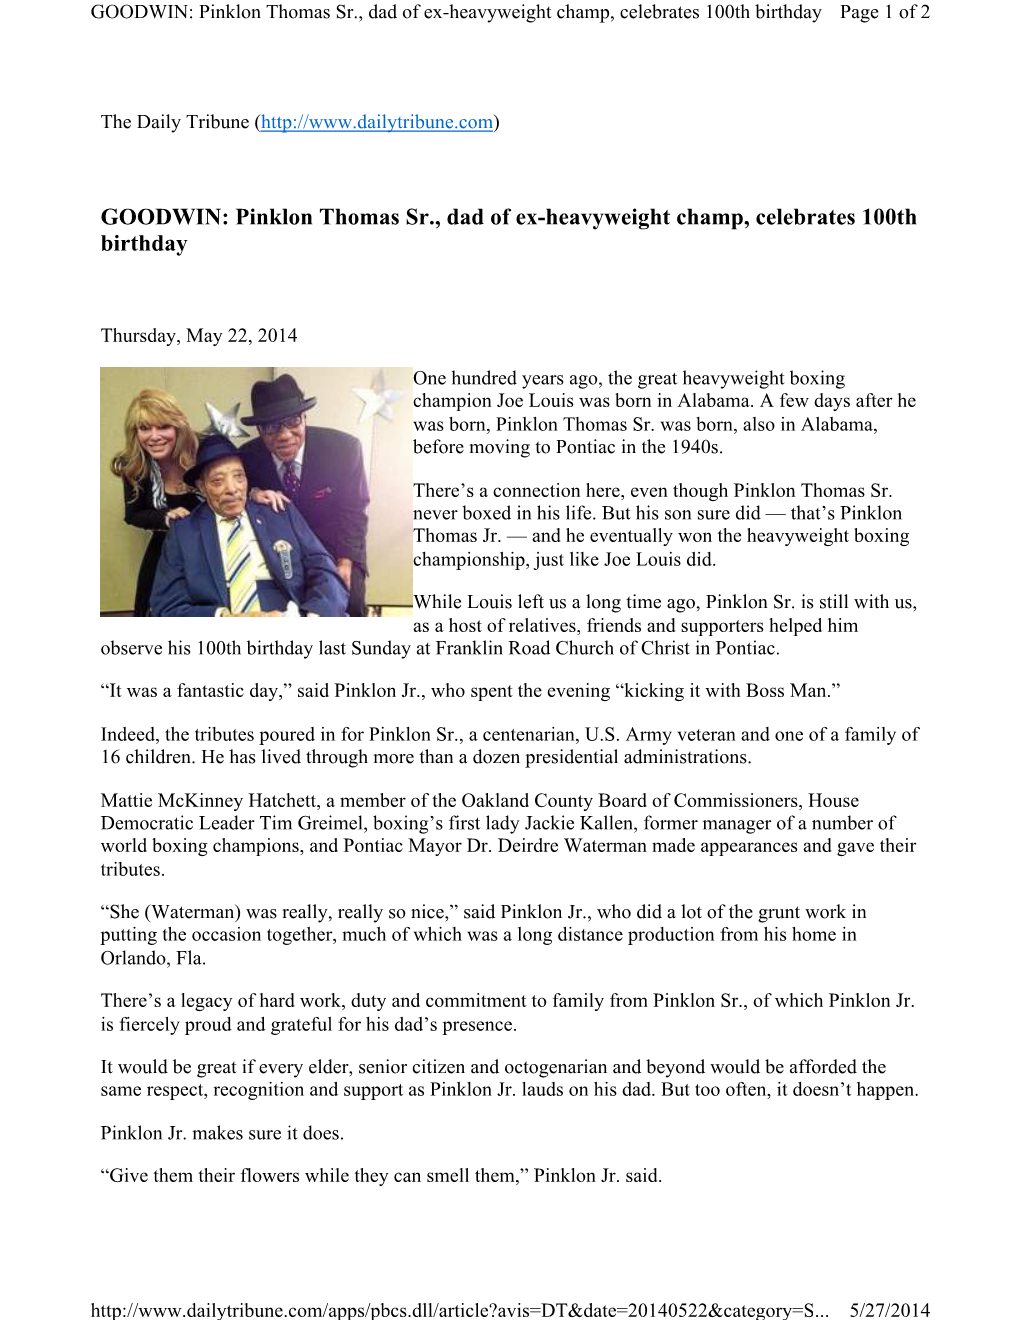 GOODWIN: Pinklon Thomas Sr., Dad of Ex-Heavyweight Champ, Celebrates 100Th Birthday Page 1 of 2